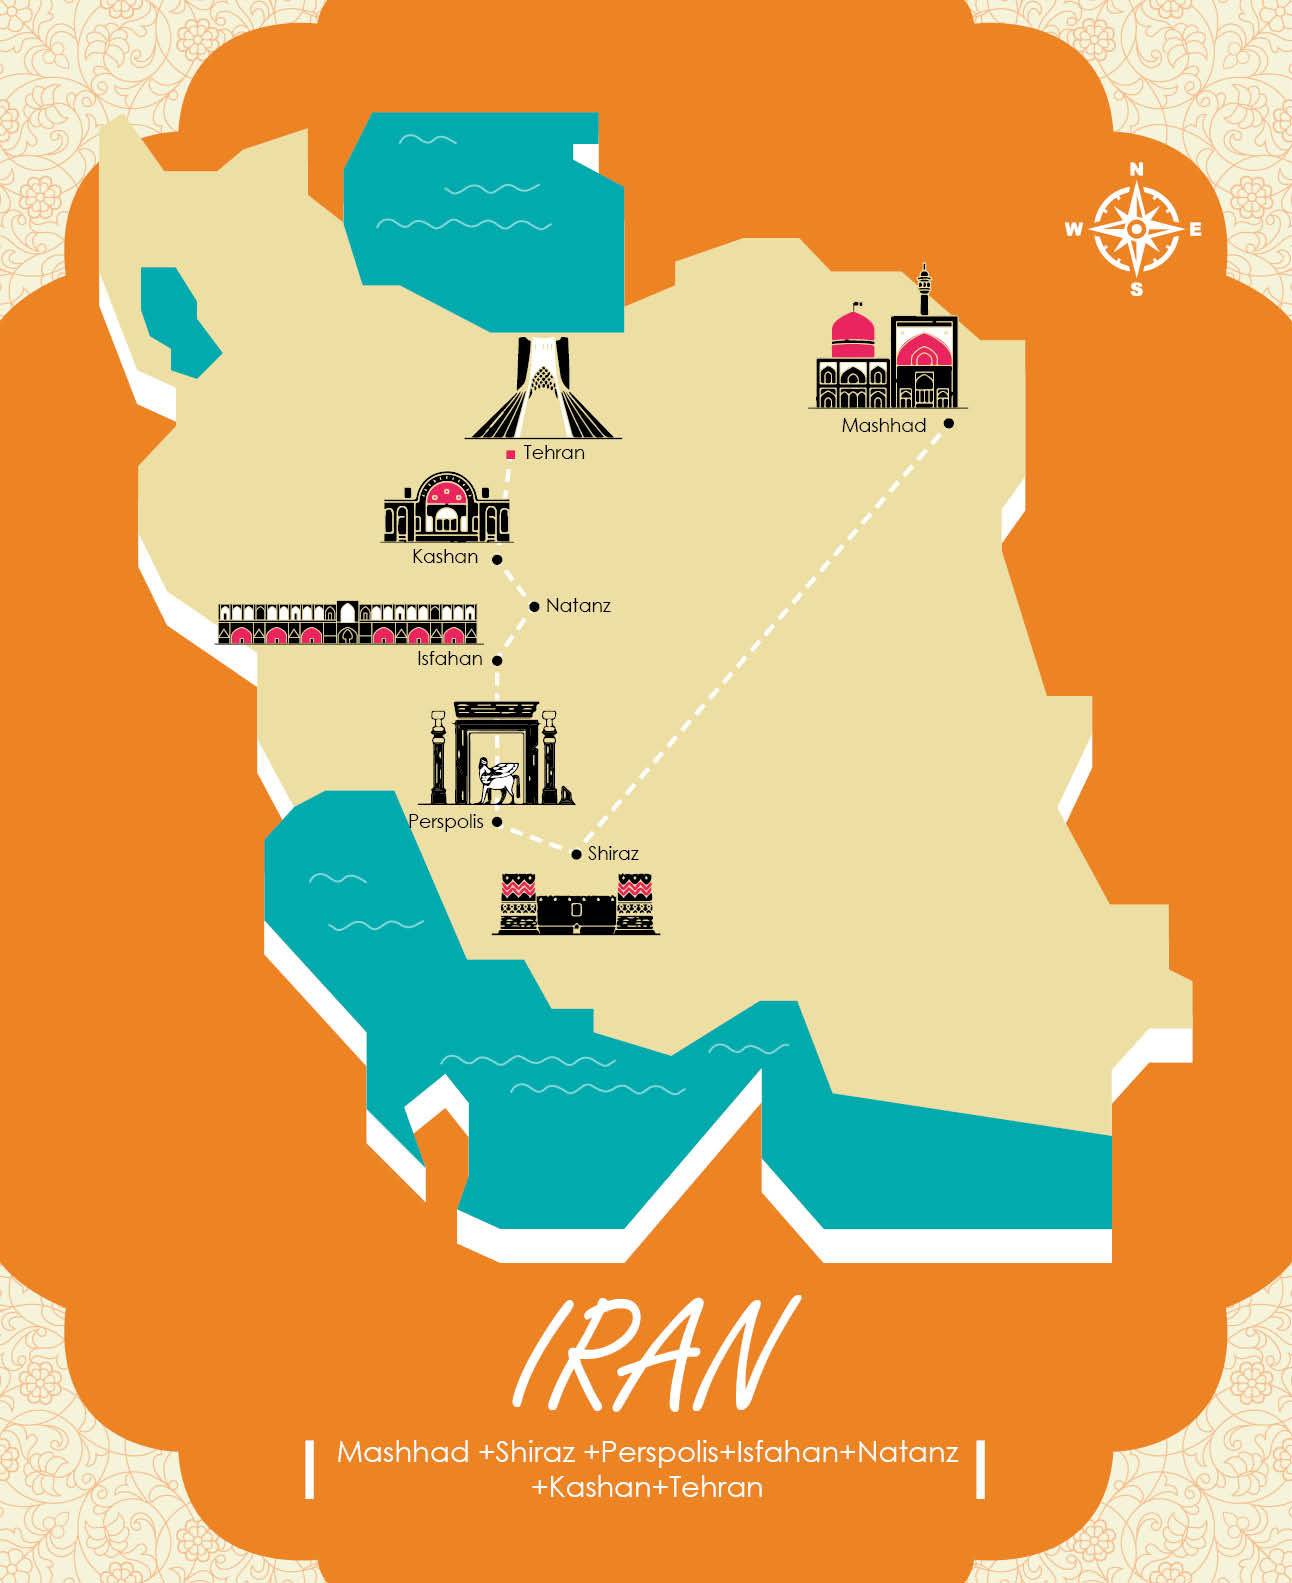 Iran tour from turkmenistan border